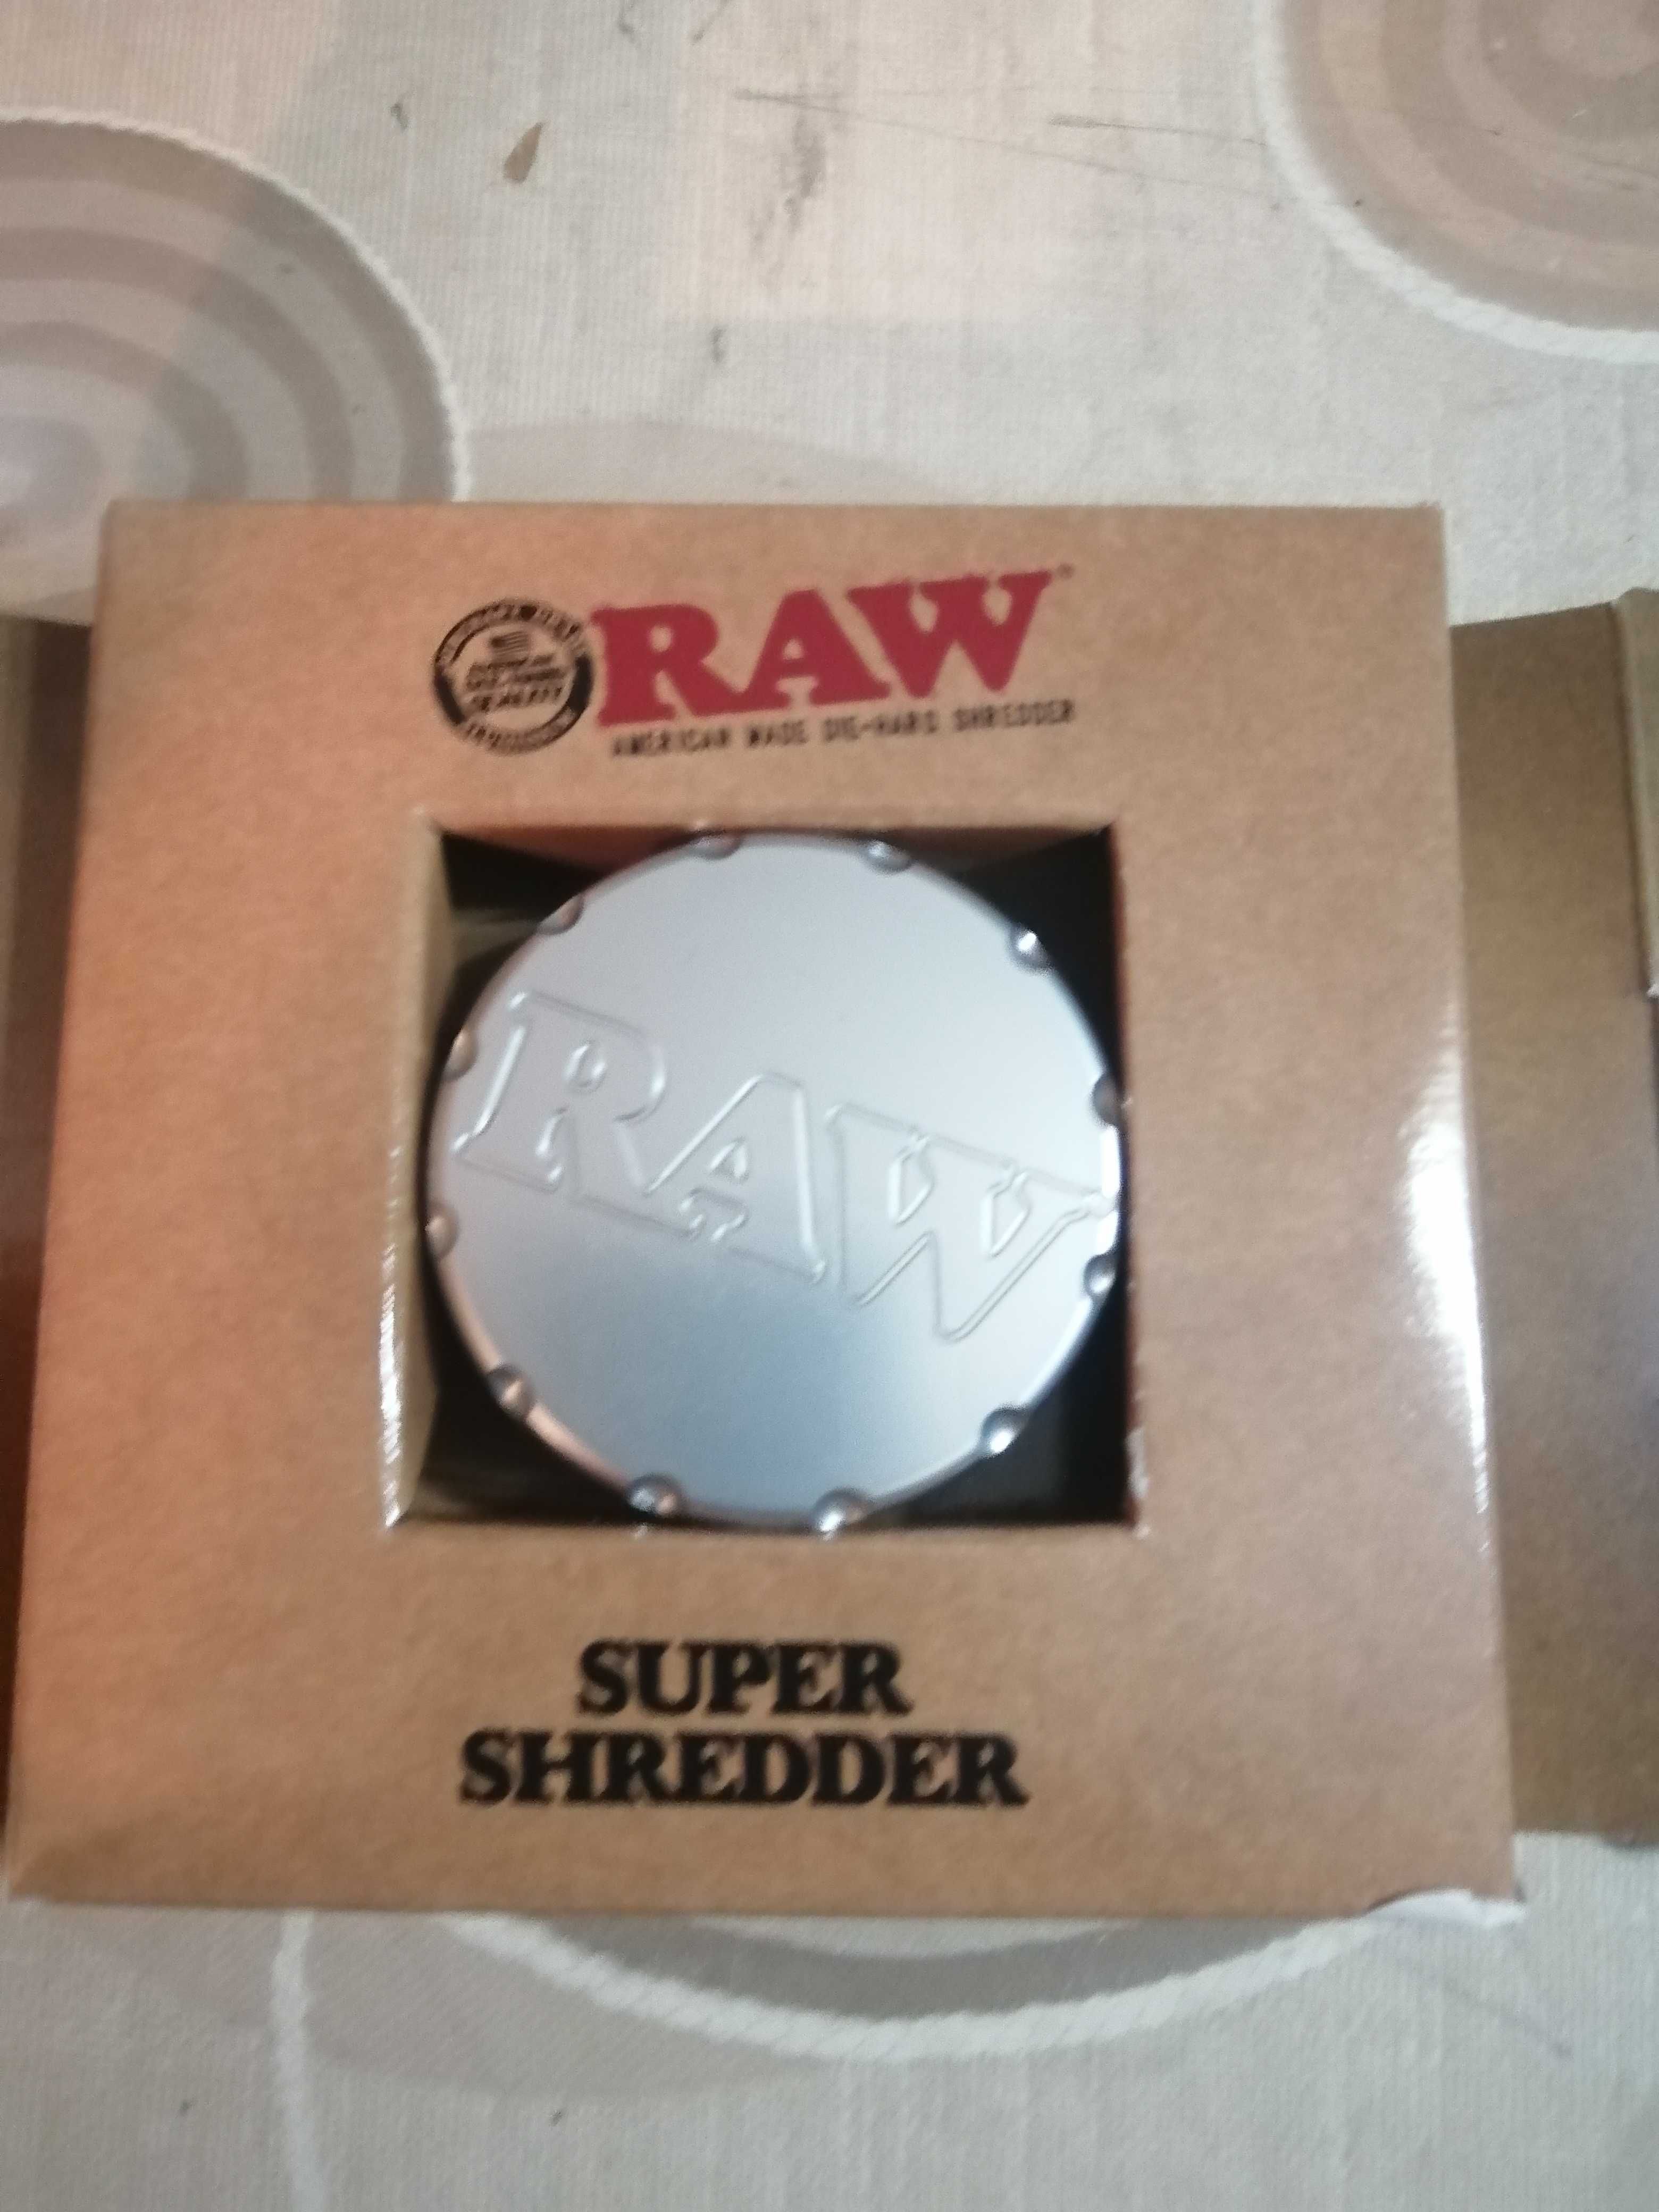 Super shredder da Raw